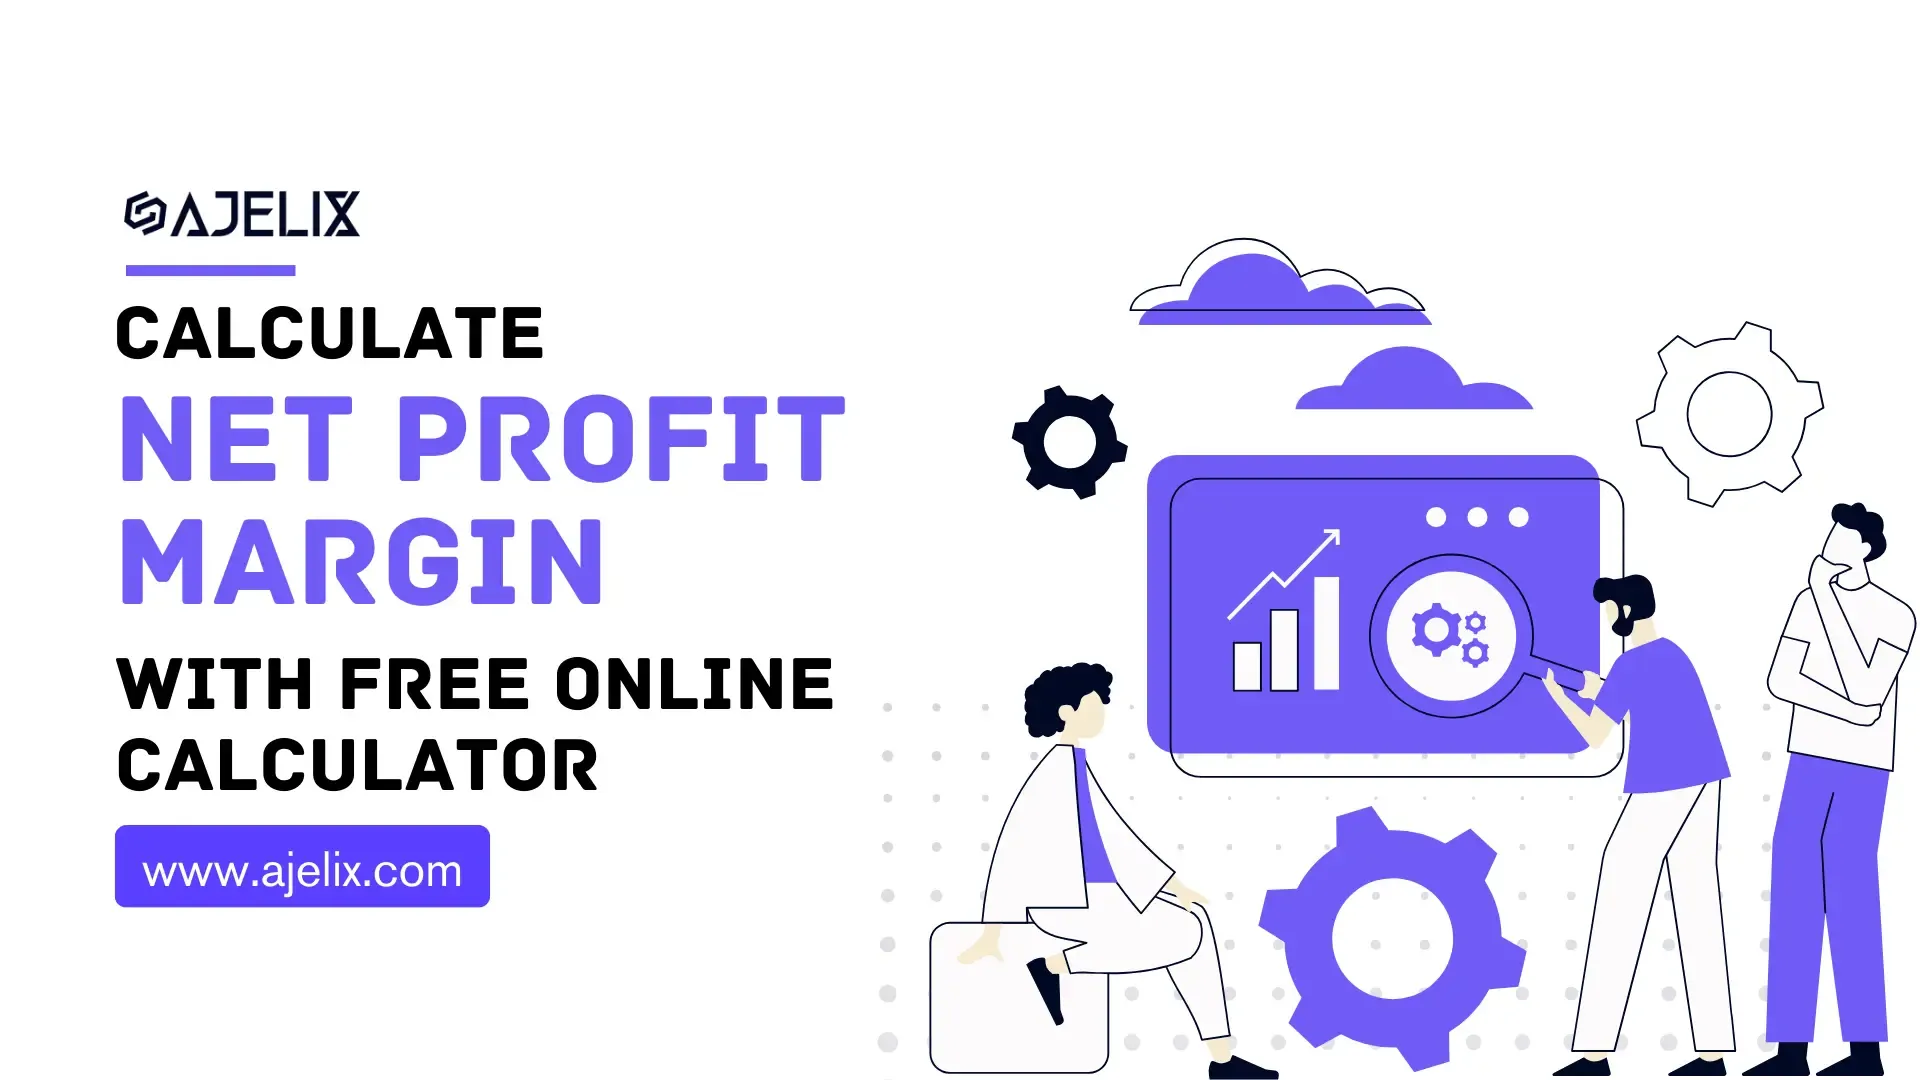 Free net profit margin calculator online by ajelix banner